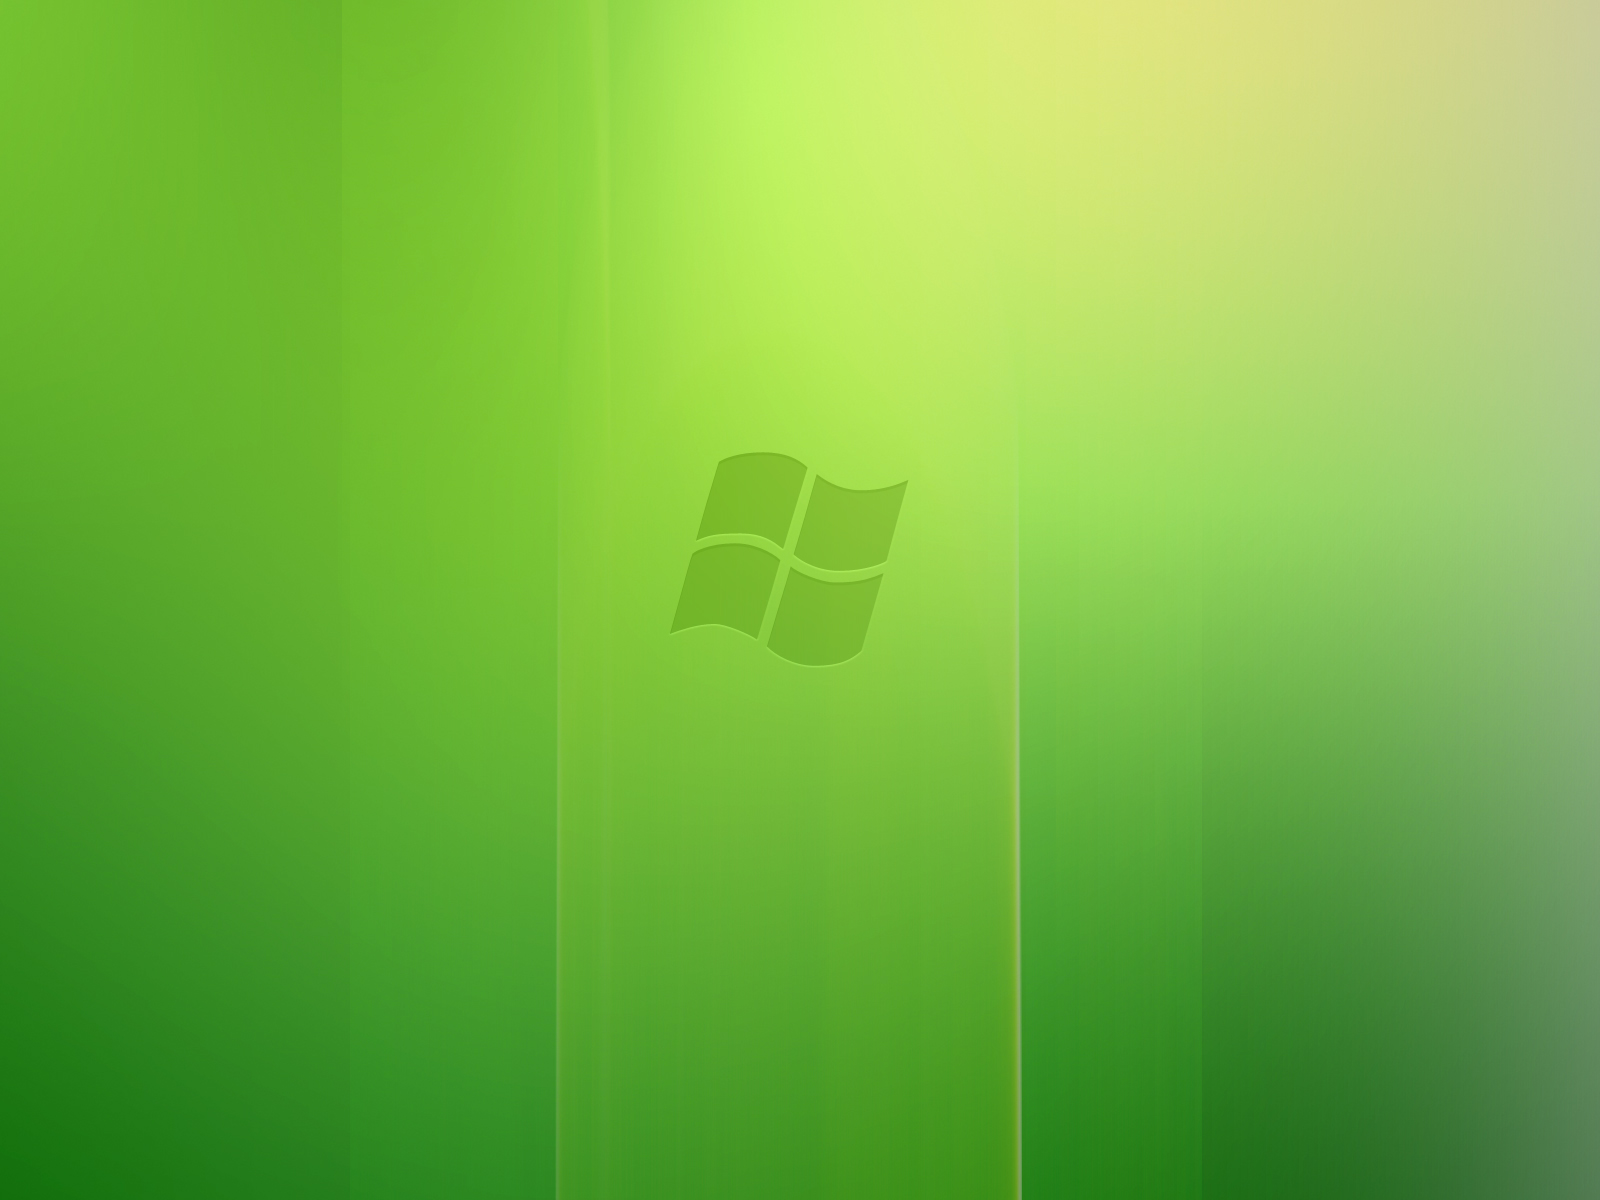 Technology Windows HD Wallpaper | Background Image